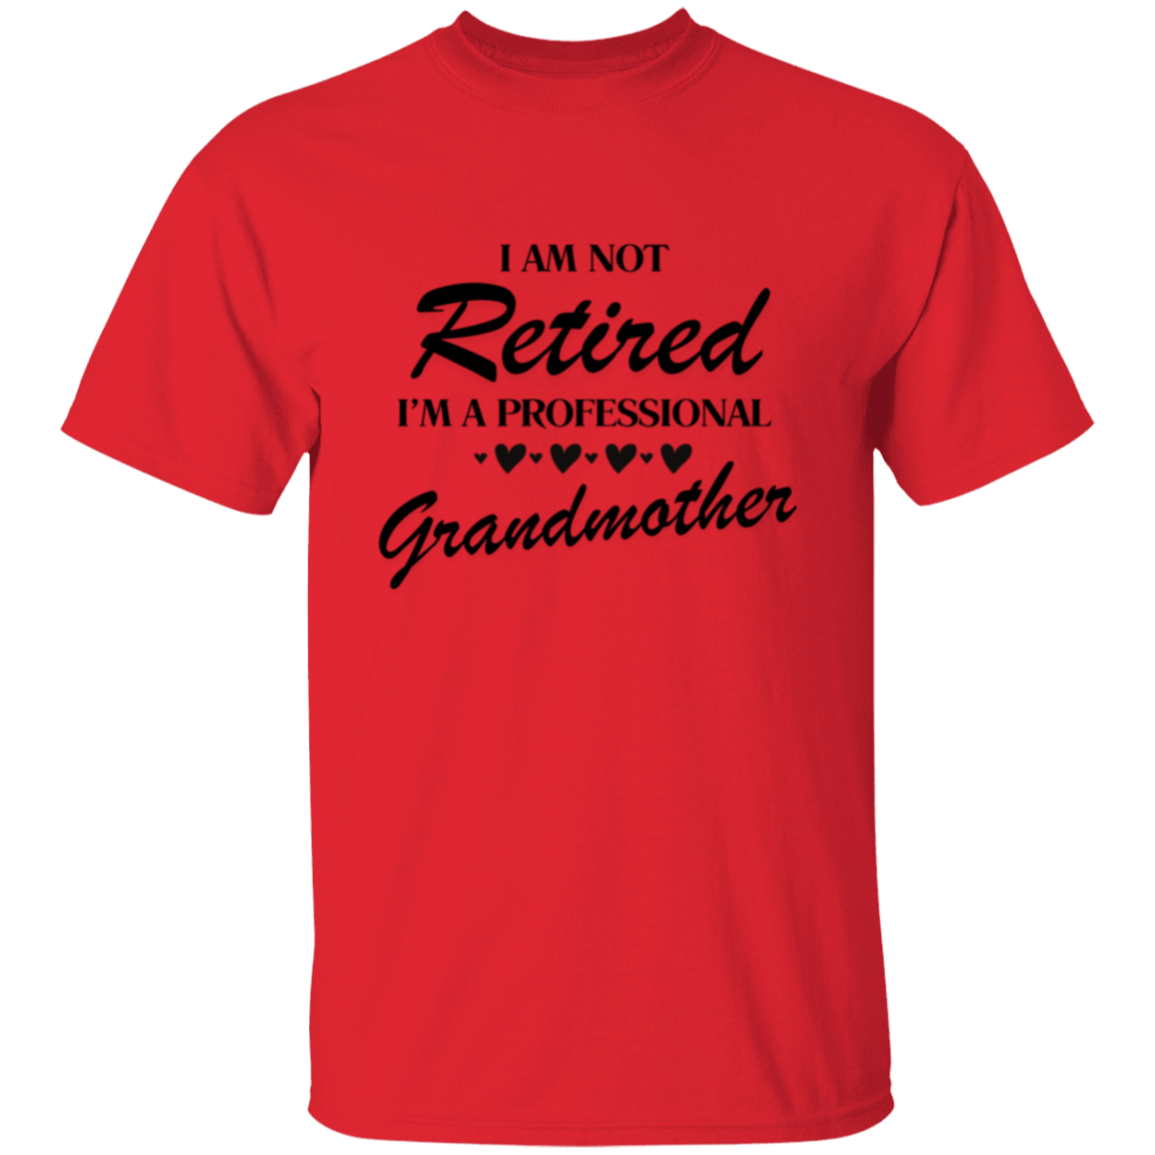 Retired - Professional Grandmother